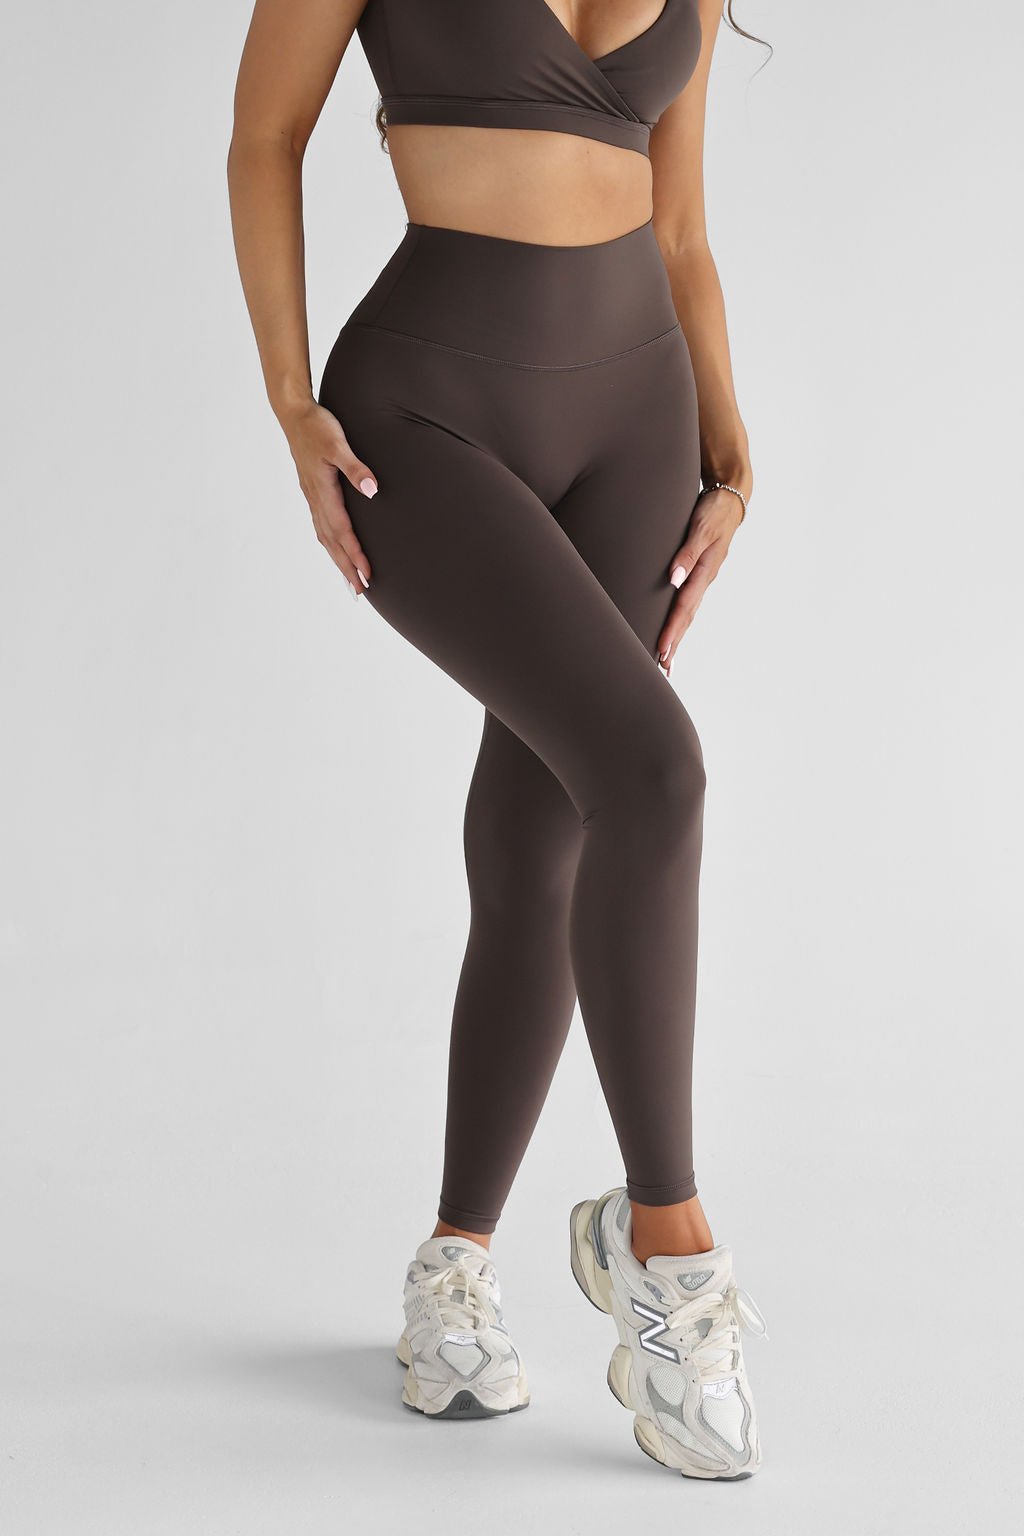 Enamor Women's Tailored Leggings (A602_Dark Chocolate Solo Stripe